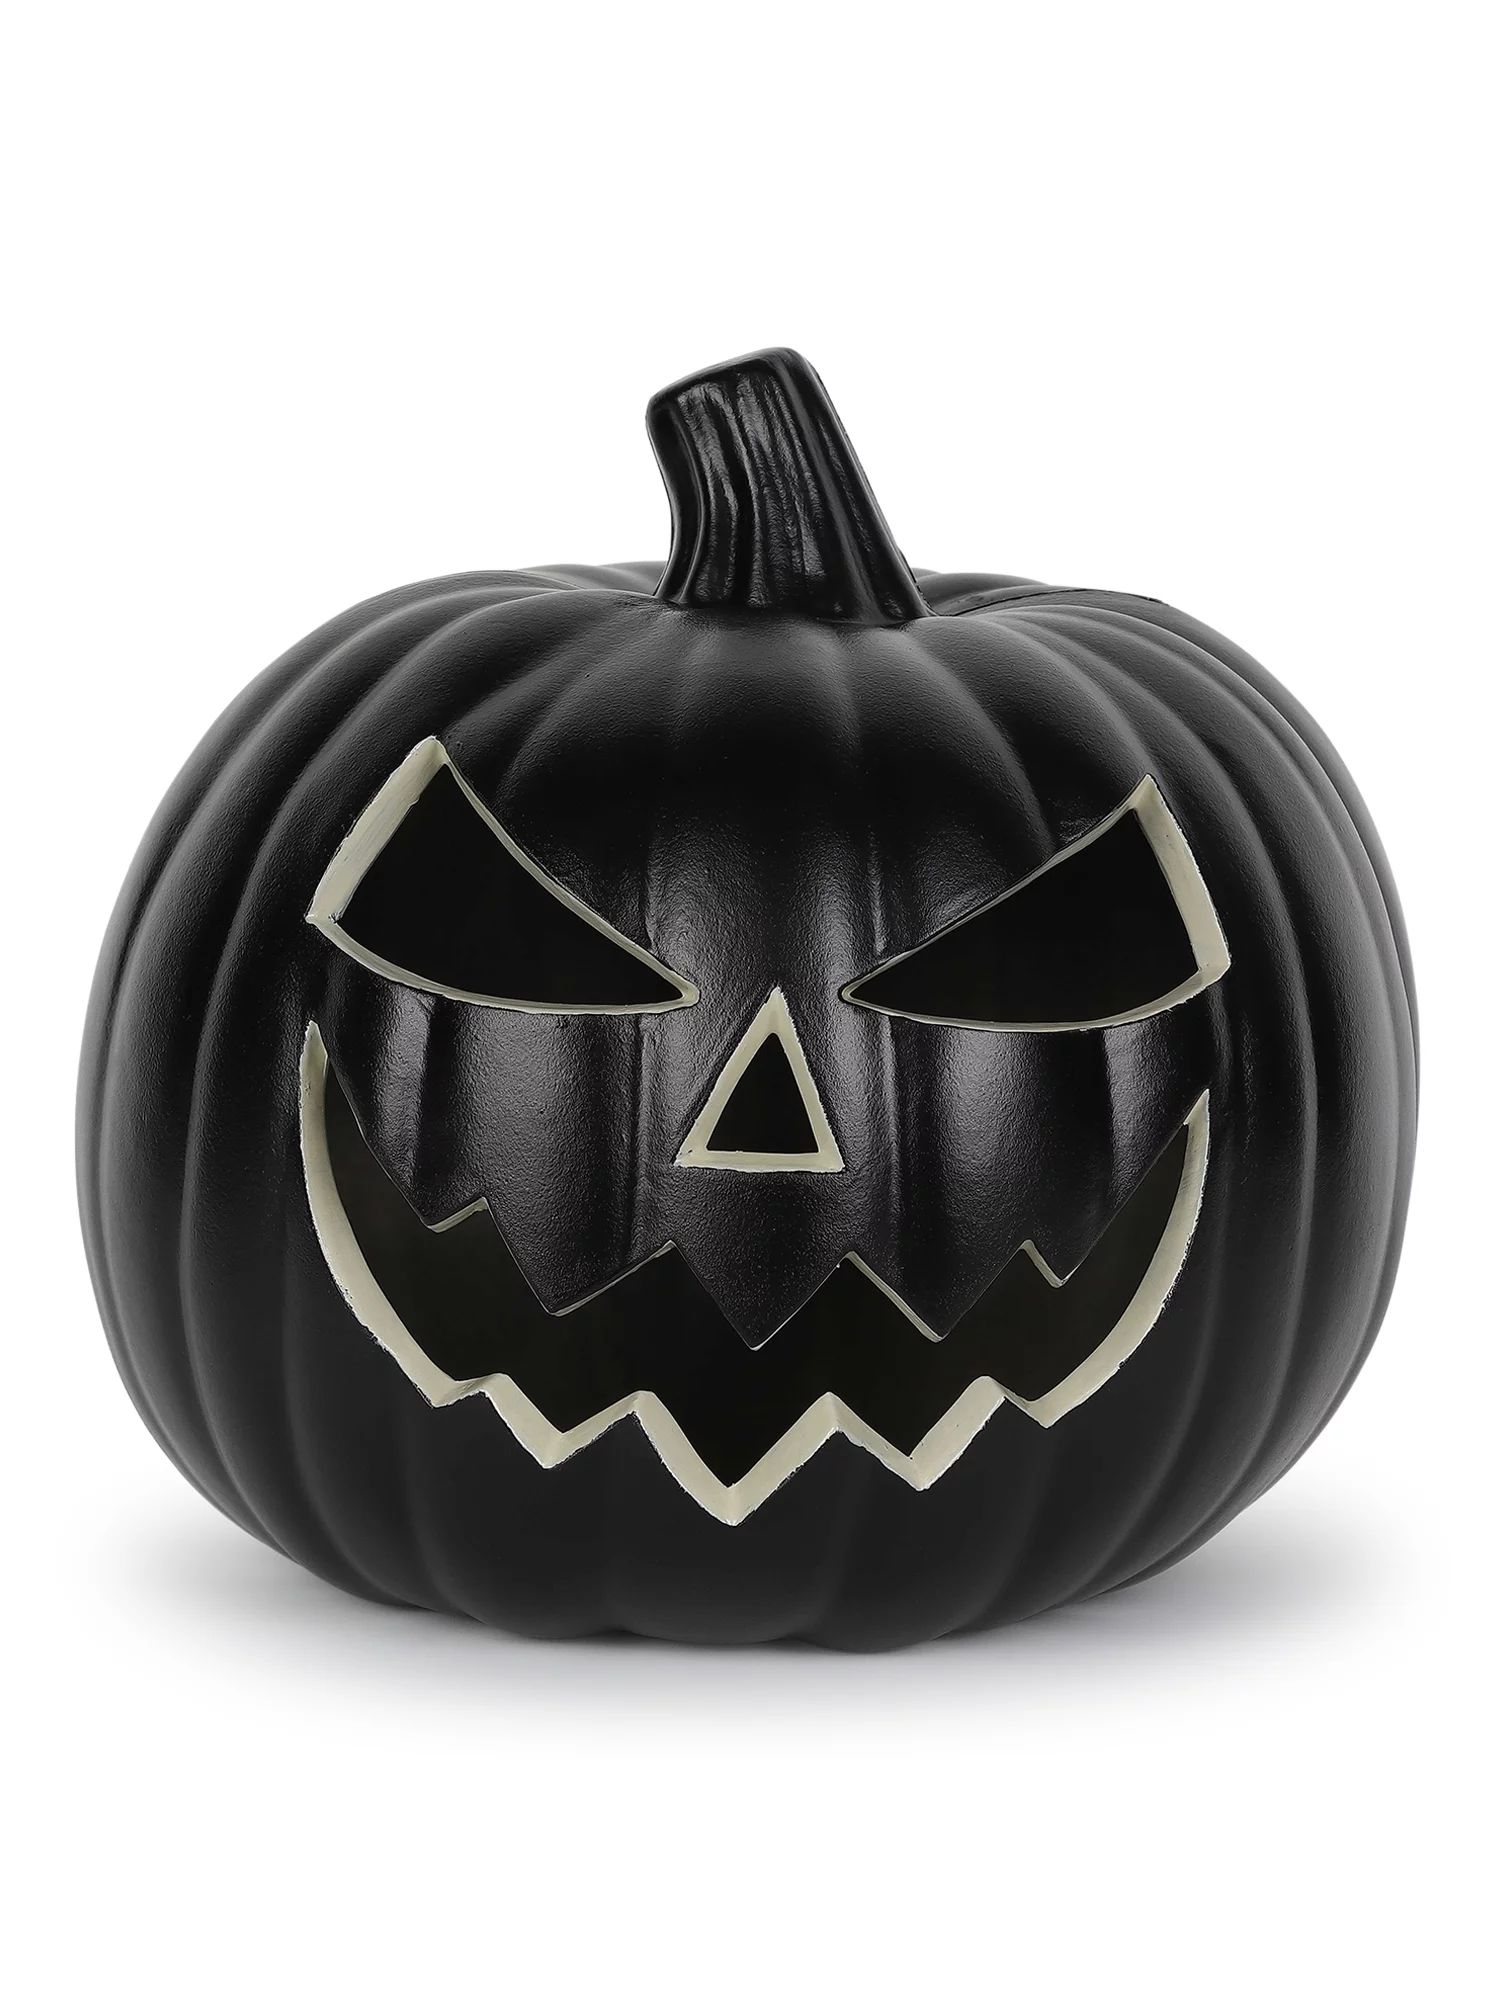 Halloween Black Polypropylene Light-Up Jack-O’-Lantern Decoration, 9 in x 9 in x 9 in, by Way T... | Walmart (US)